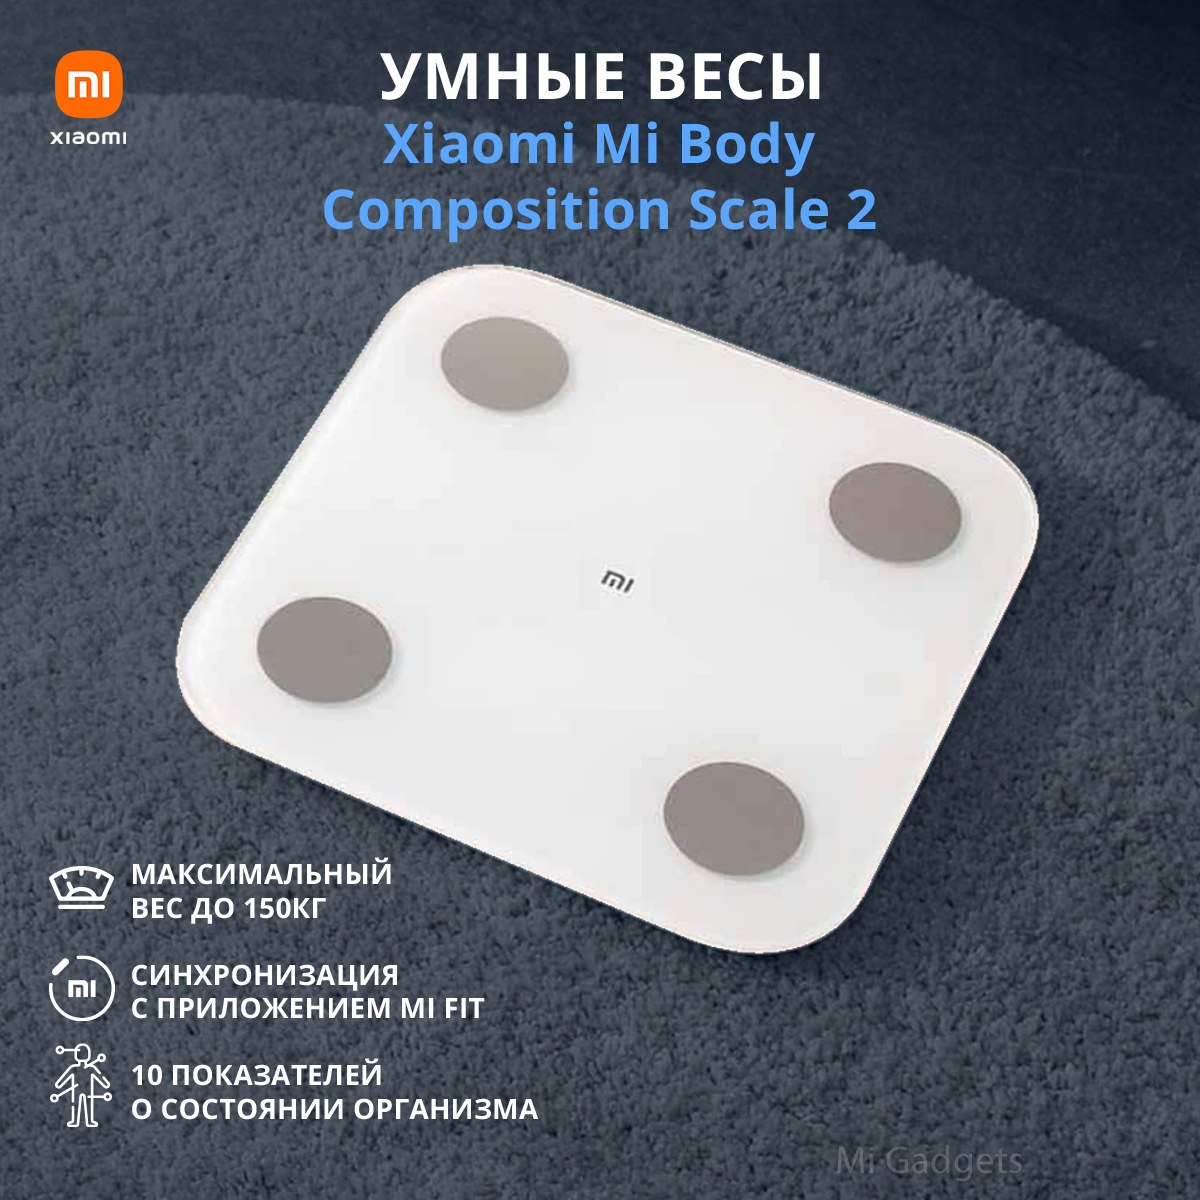 Body composition scale 2 приложение для весов. Xiaomi mi body Composition Scale 2. Умные весы mi body Composition Scale 2. Весы Xiaomi mi body Composition. Весы Xiaomi mi body Composition Scale.